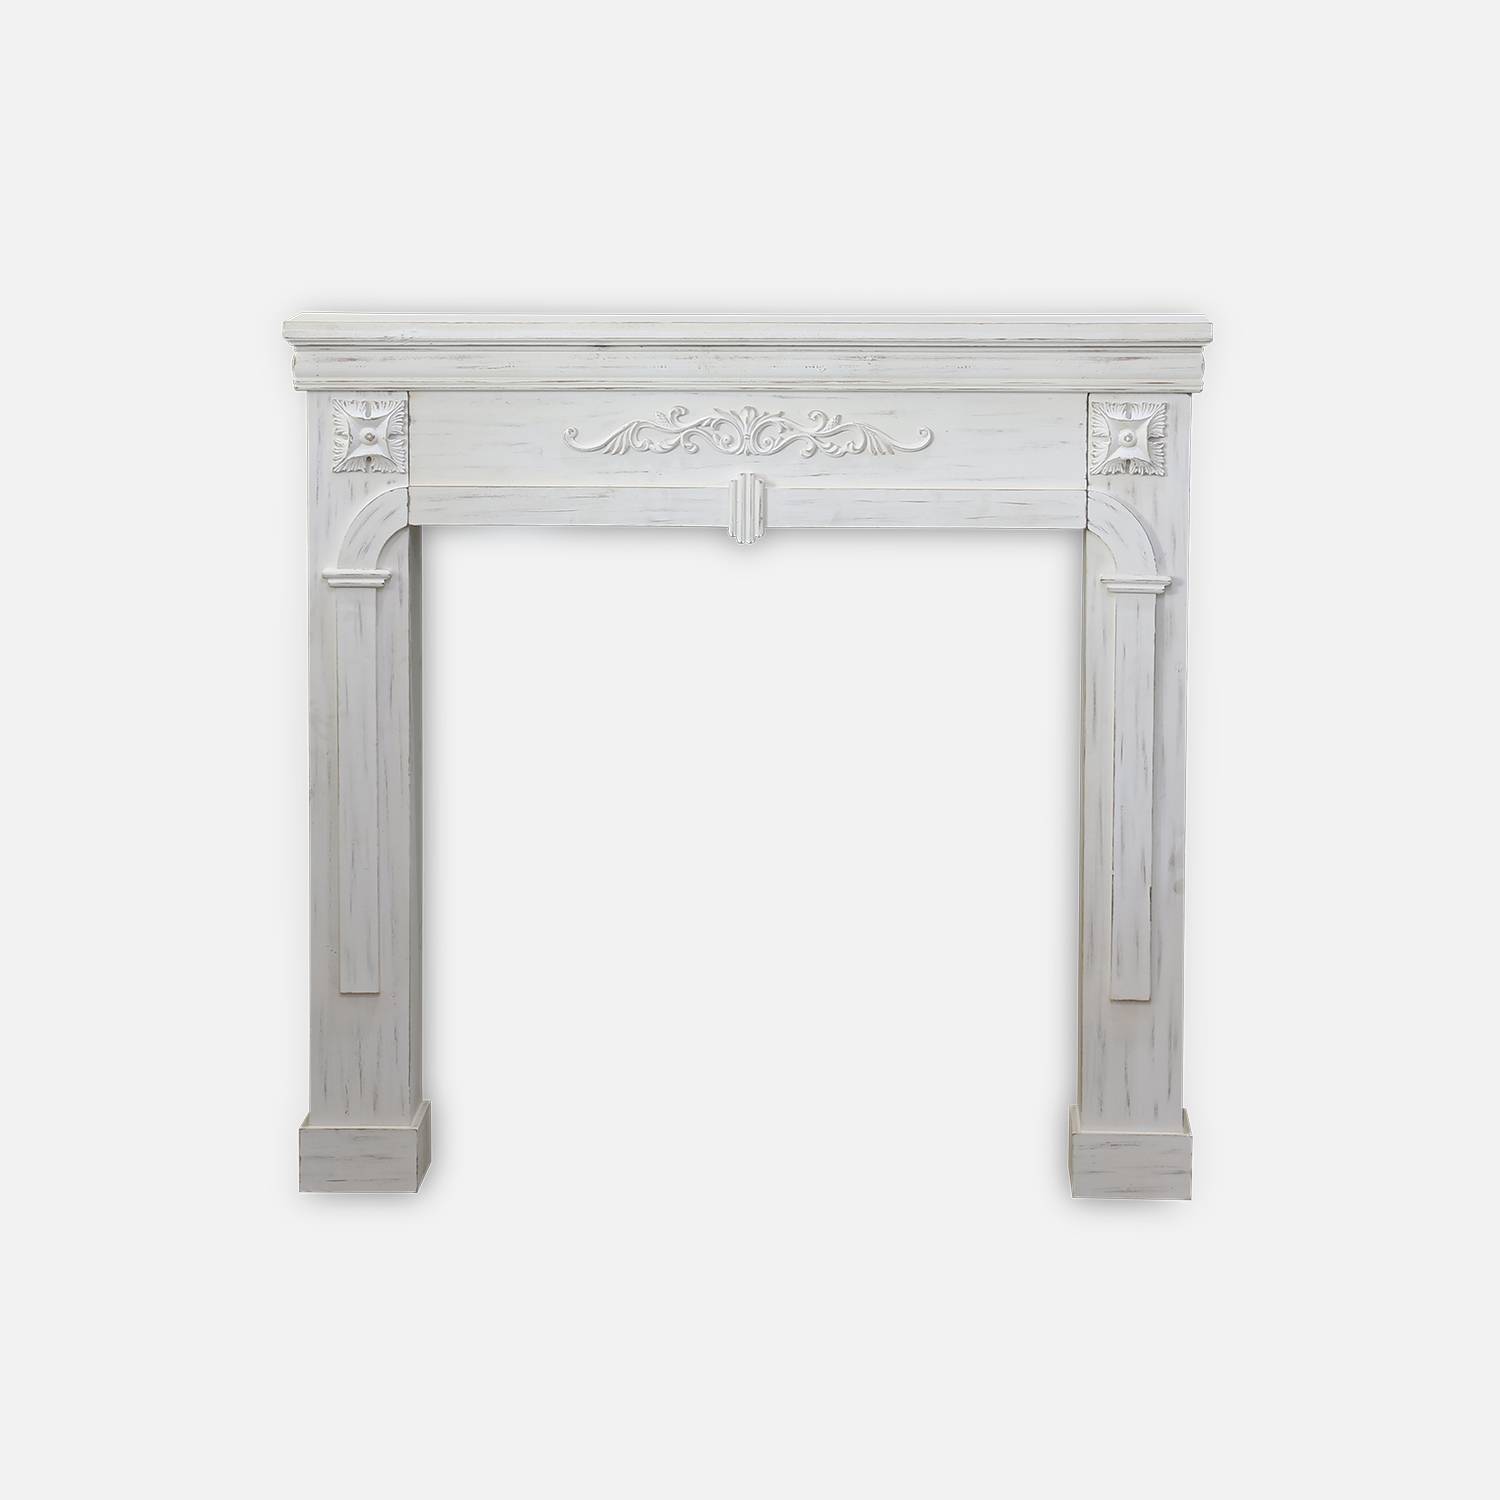 Decorative fireplace surround, MDF with firwood veneer, 104x17x100cm - Romance - Vintage White Photo2